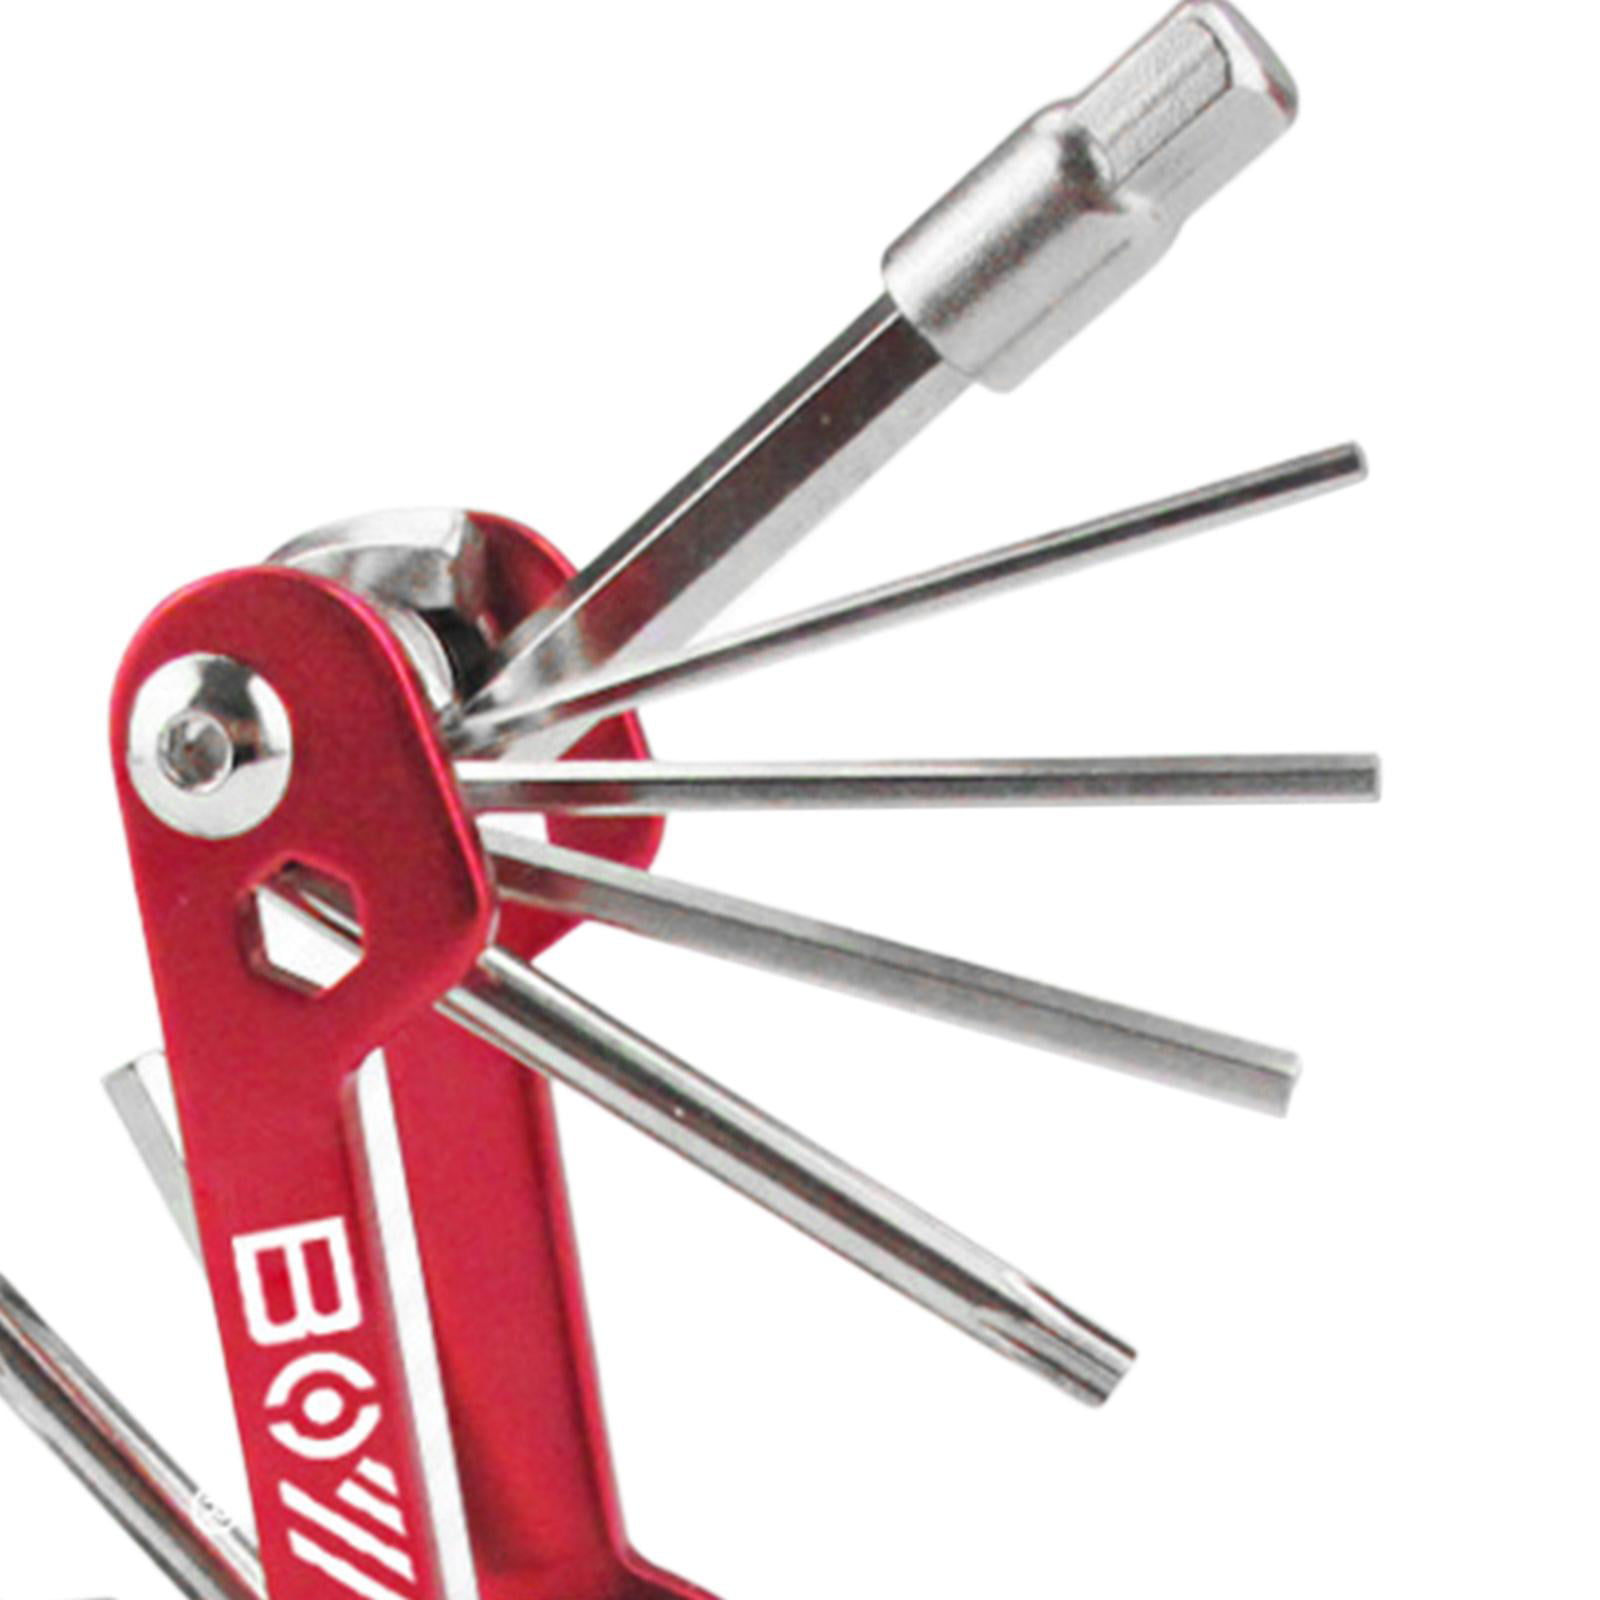 Folding Bike Bicycle Repair Hex Wrench Set Screwdriver Multi-function Tools US 